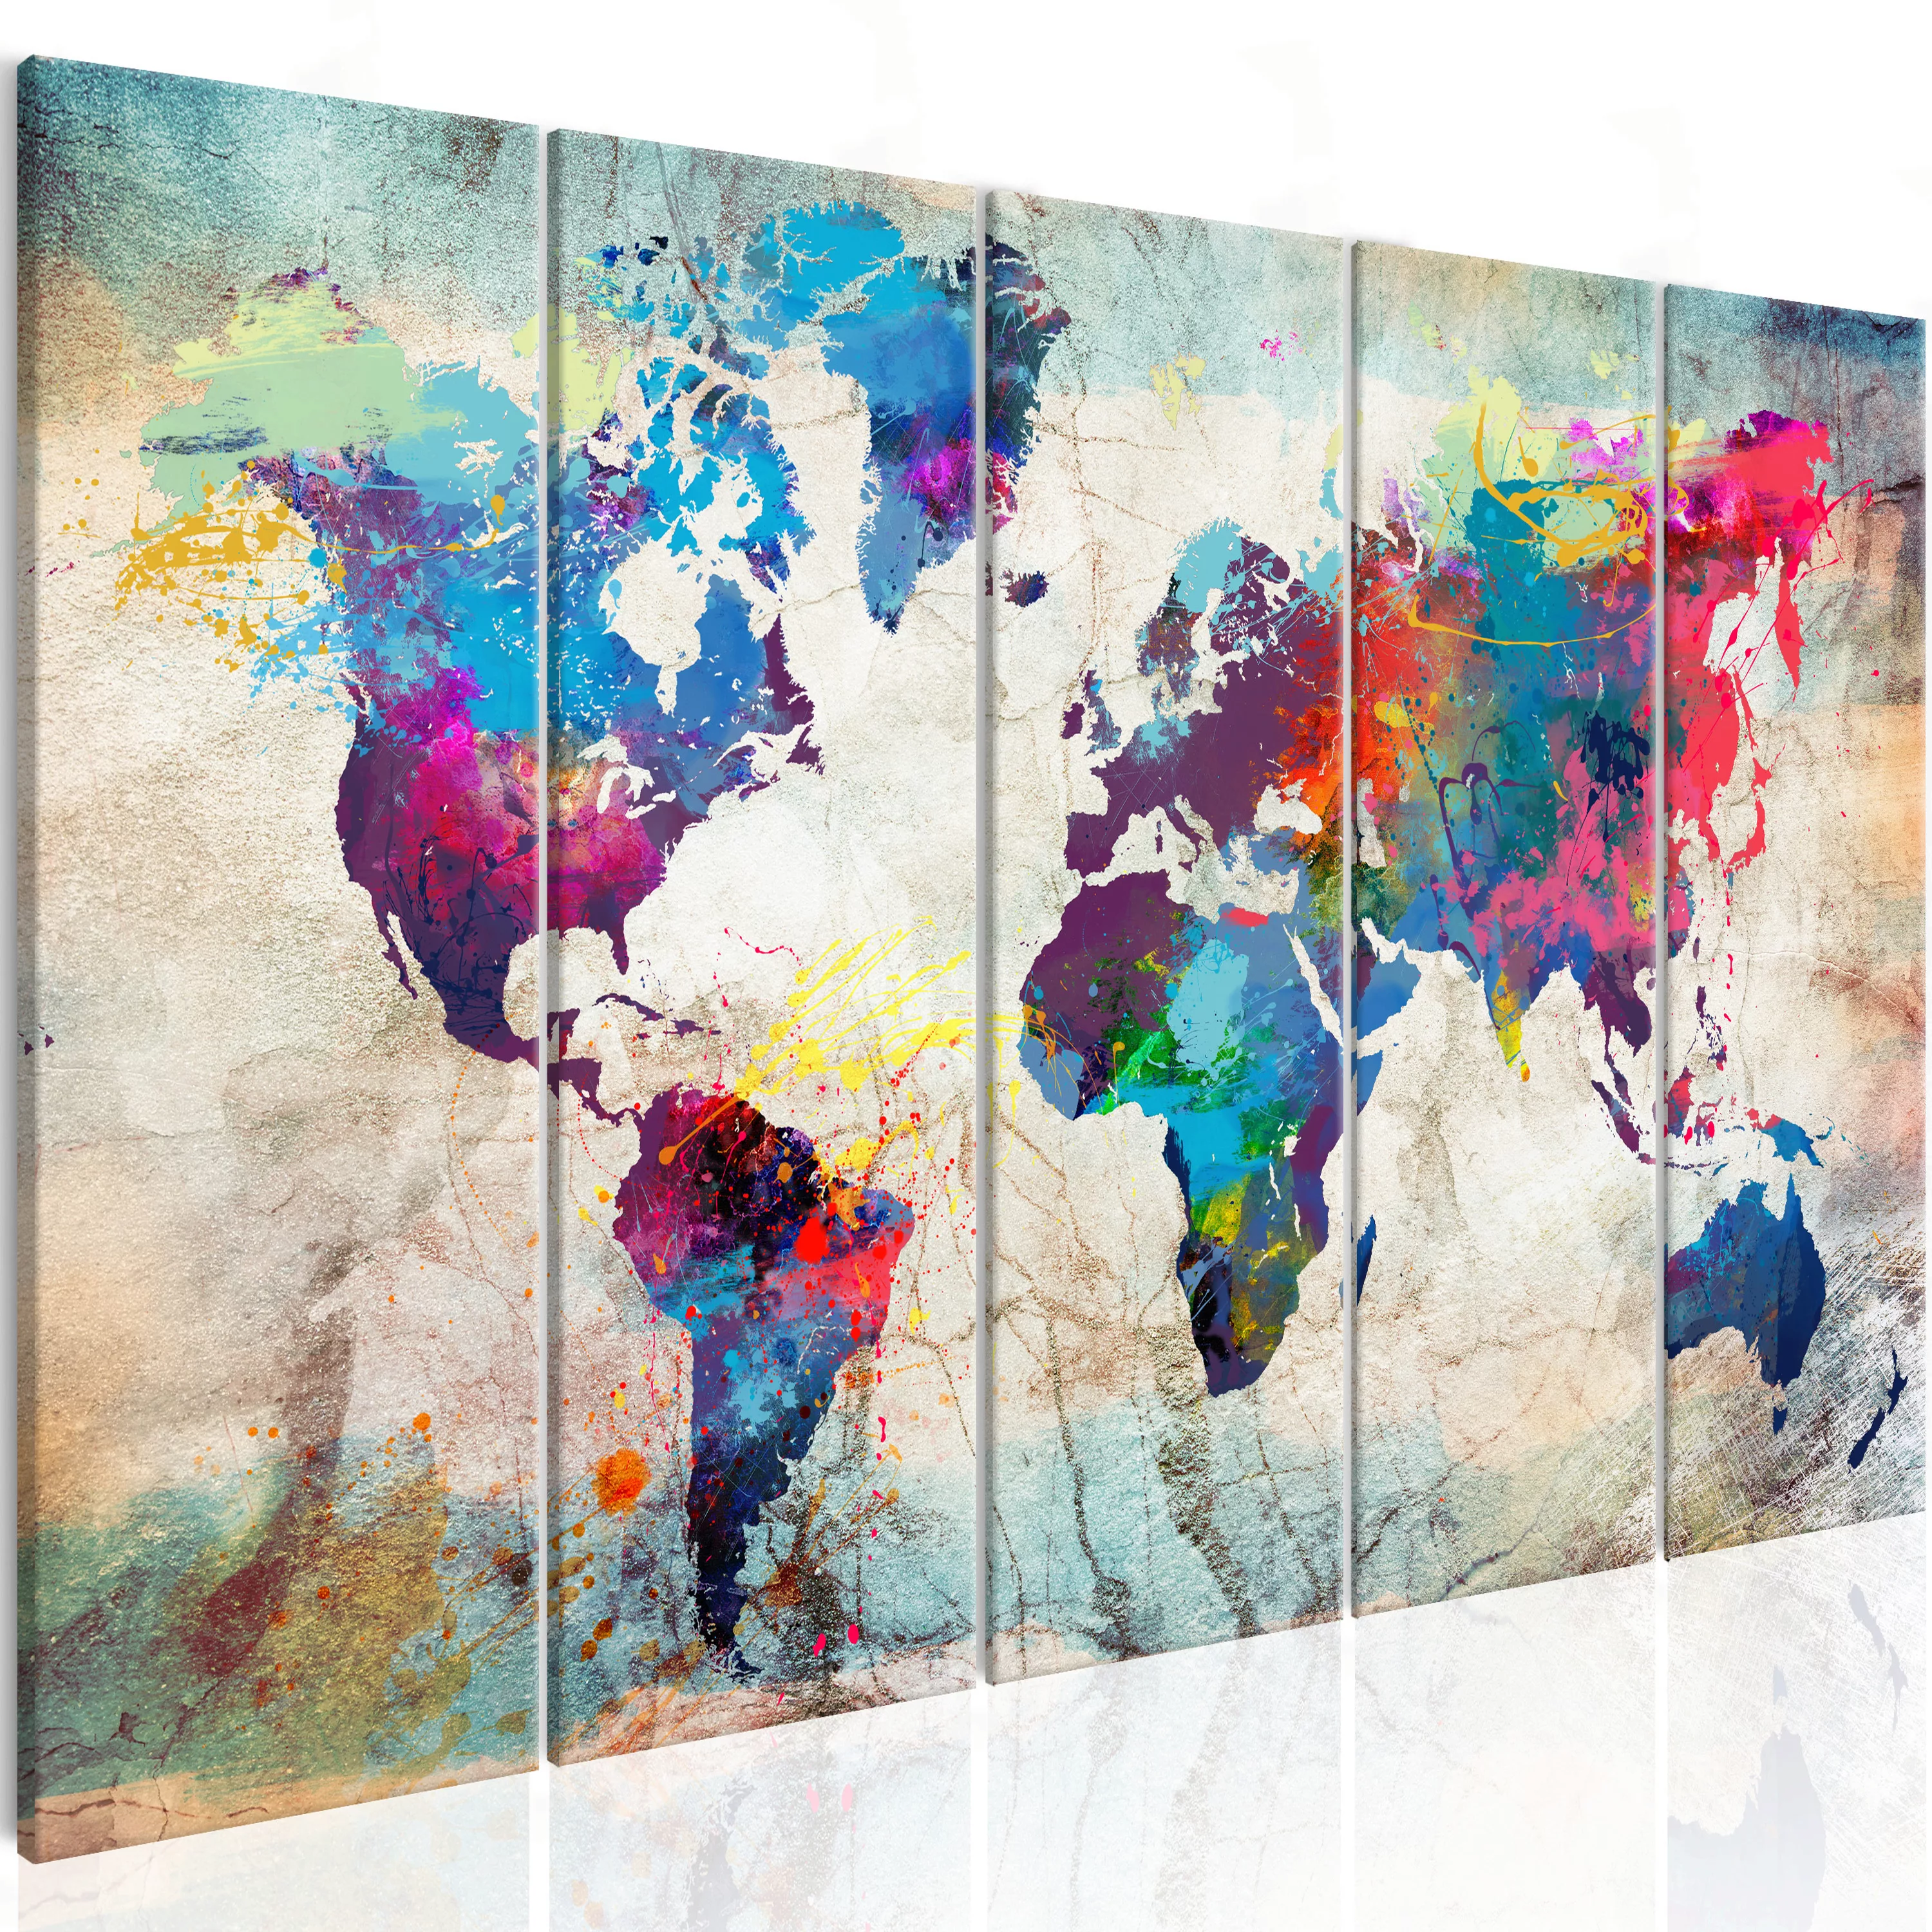 Wandbild - World Map: Cracked Wall günstig online kaufen